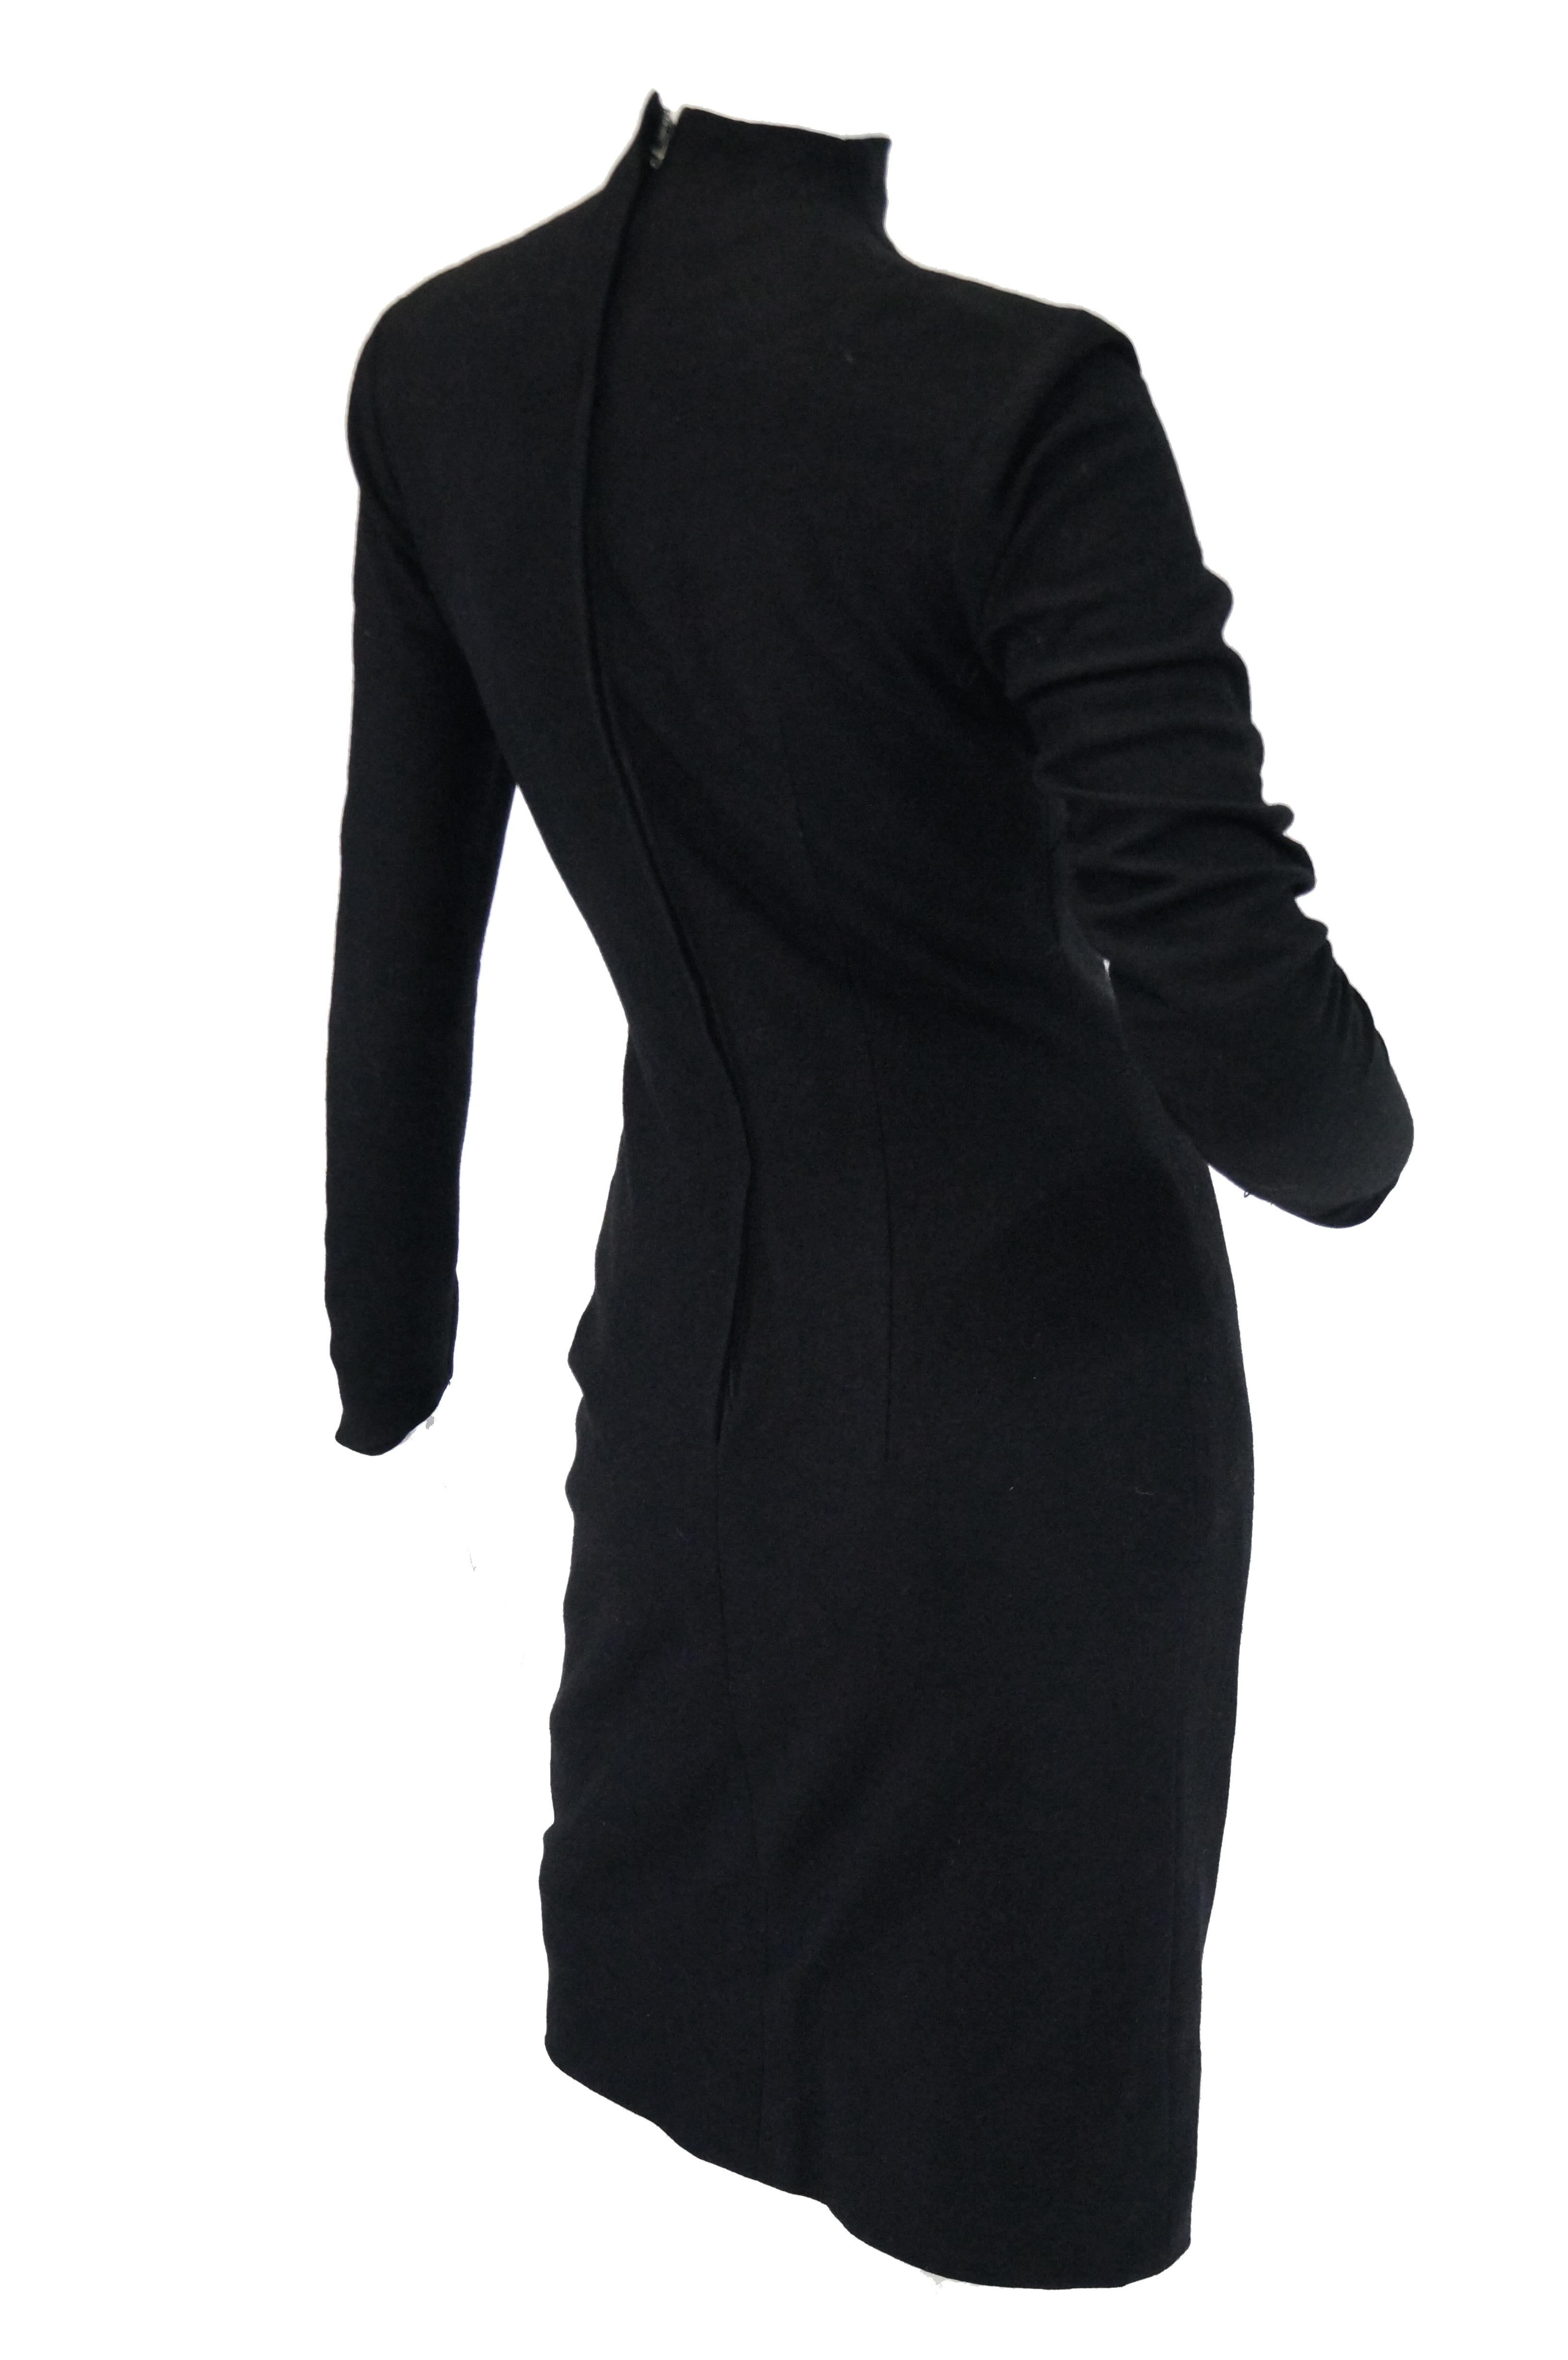 Rare 1960s Eisenberg Black Wool Mod Style Sheath Dress For Sale 3